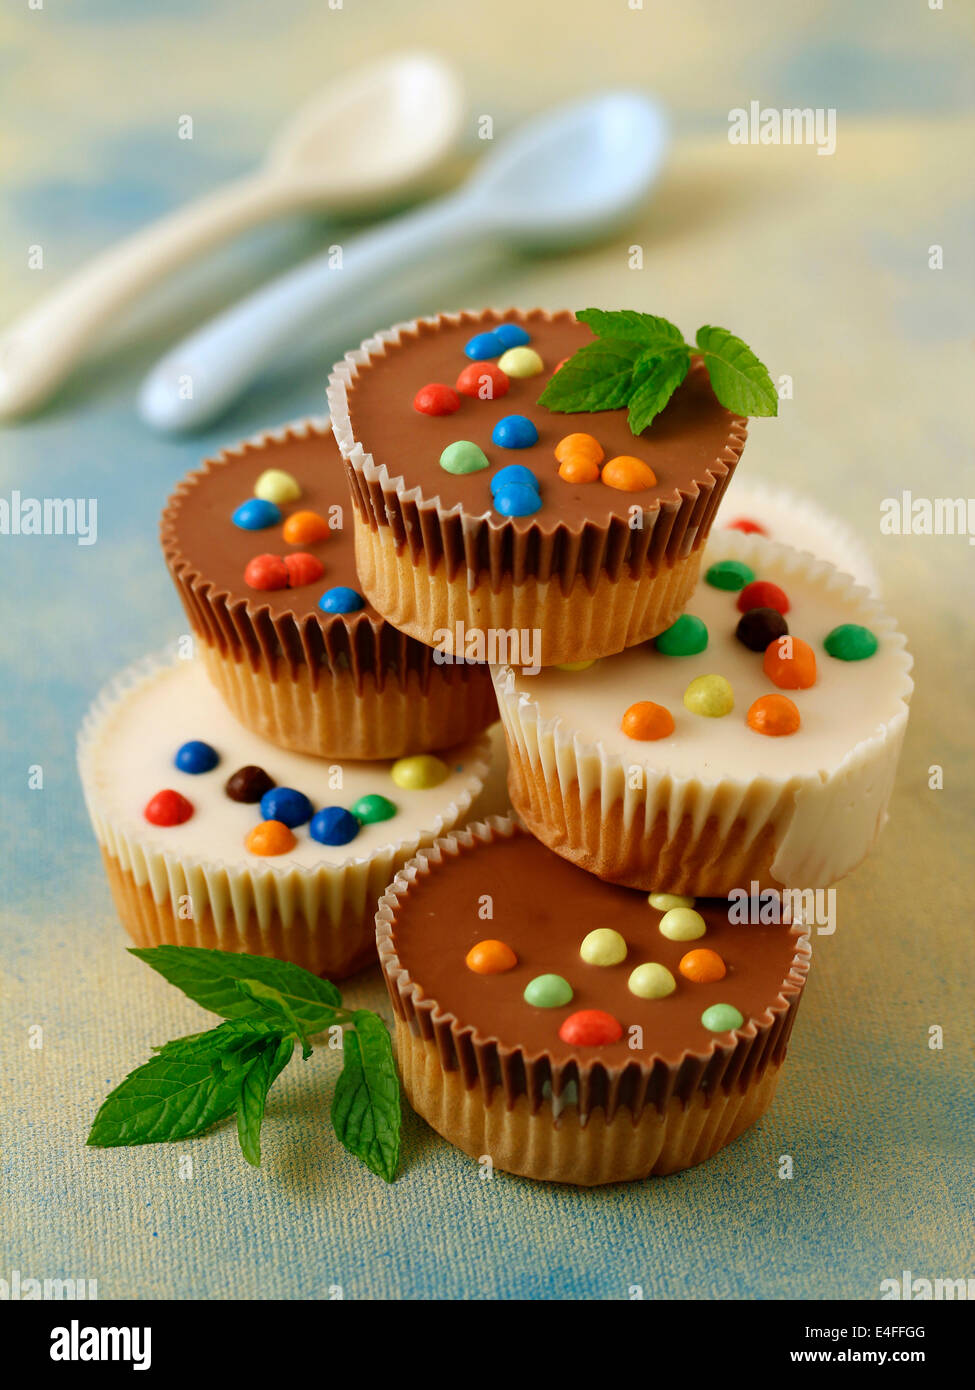 Bonbon cupcakes. Recipe available. Stock Photo